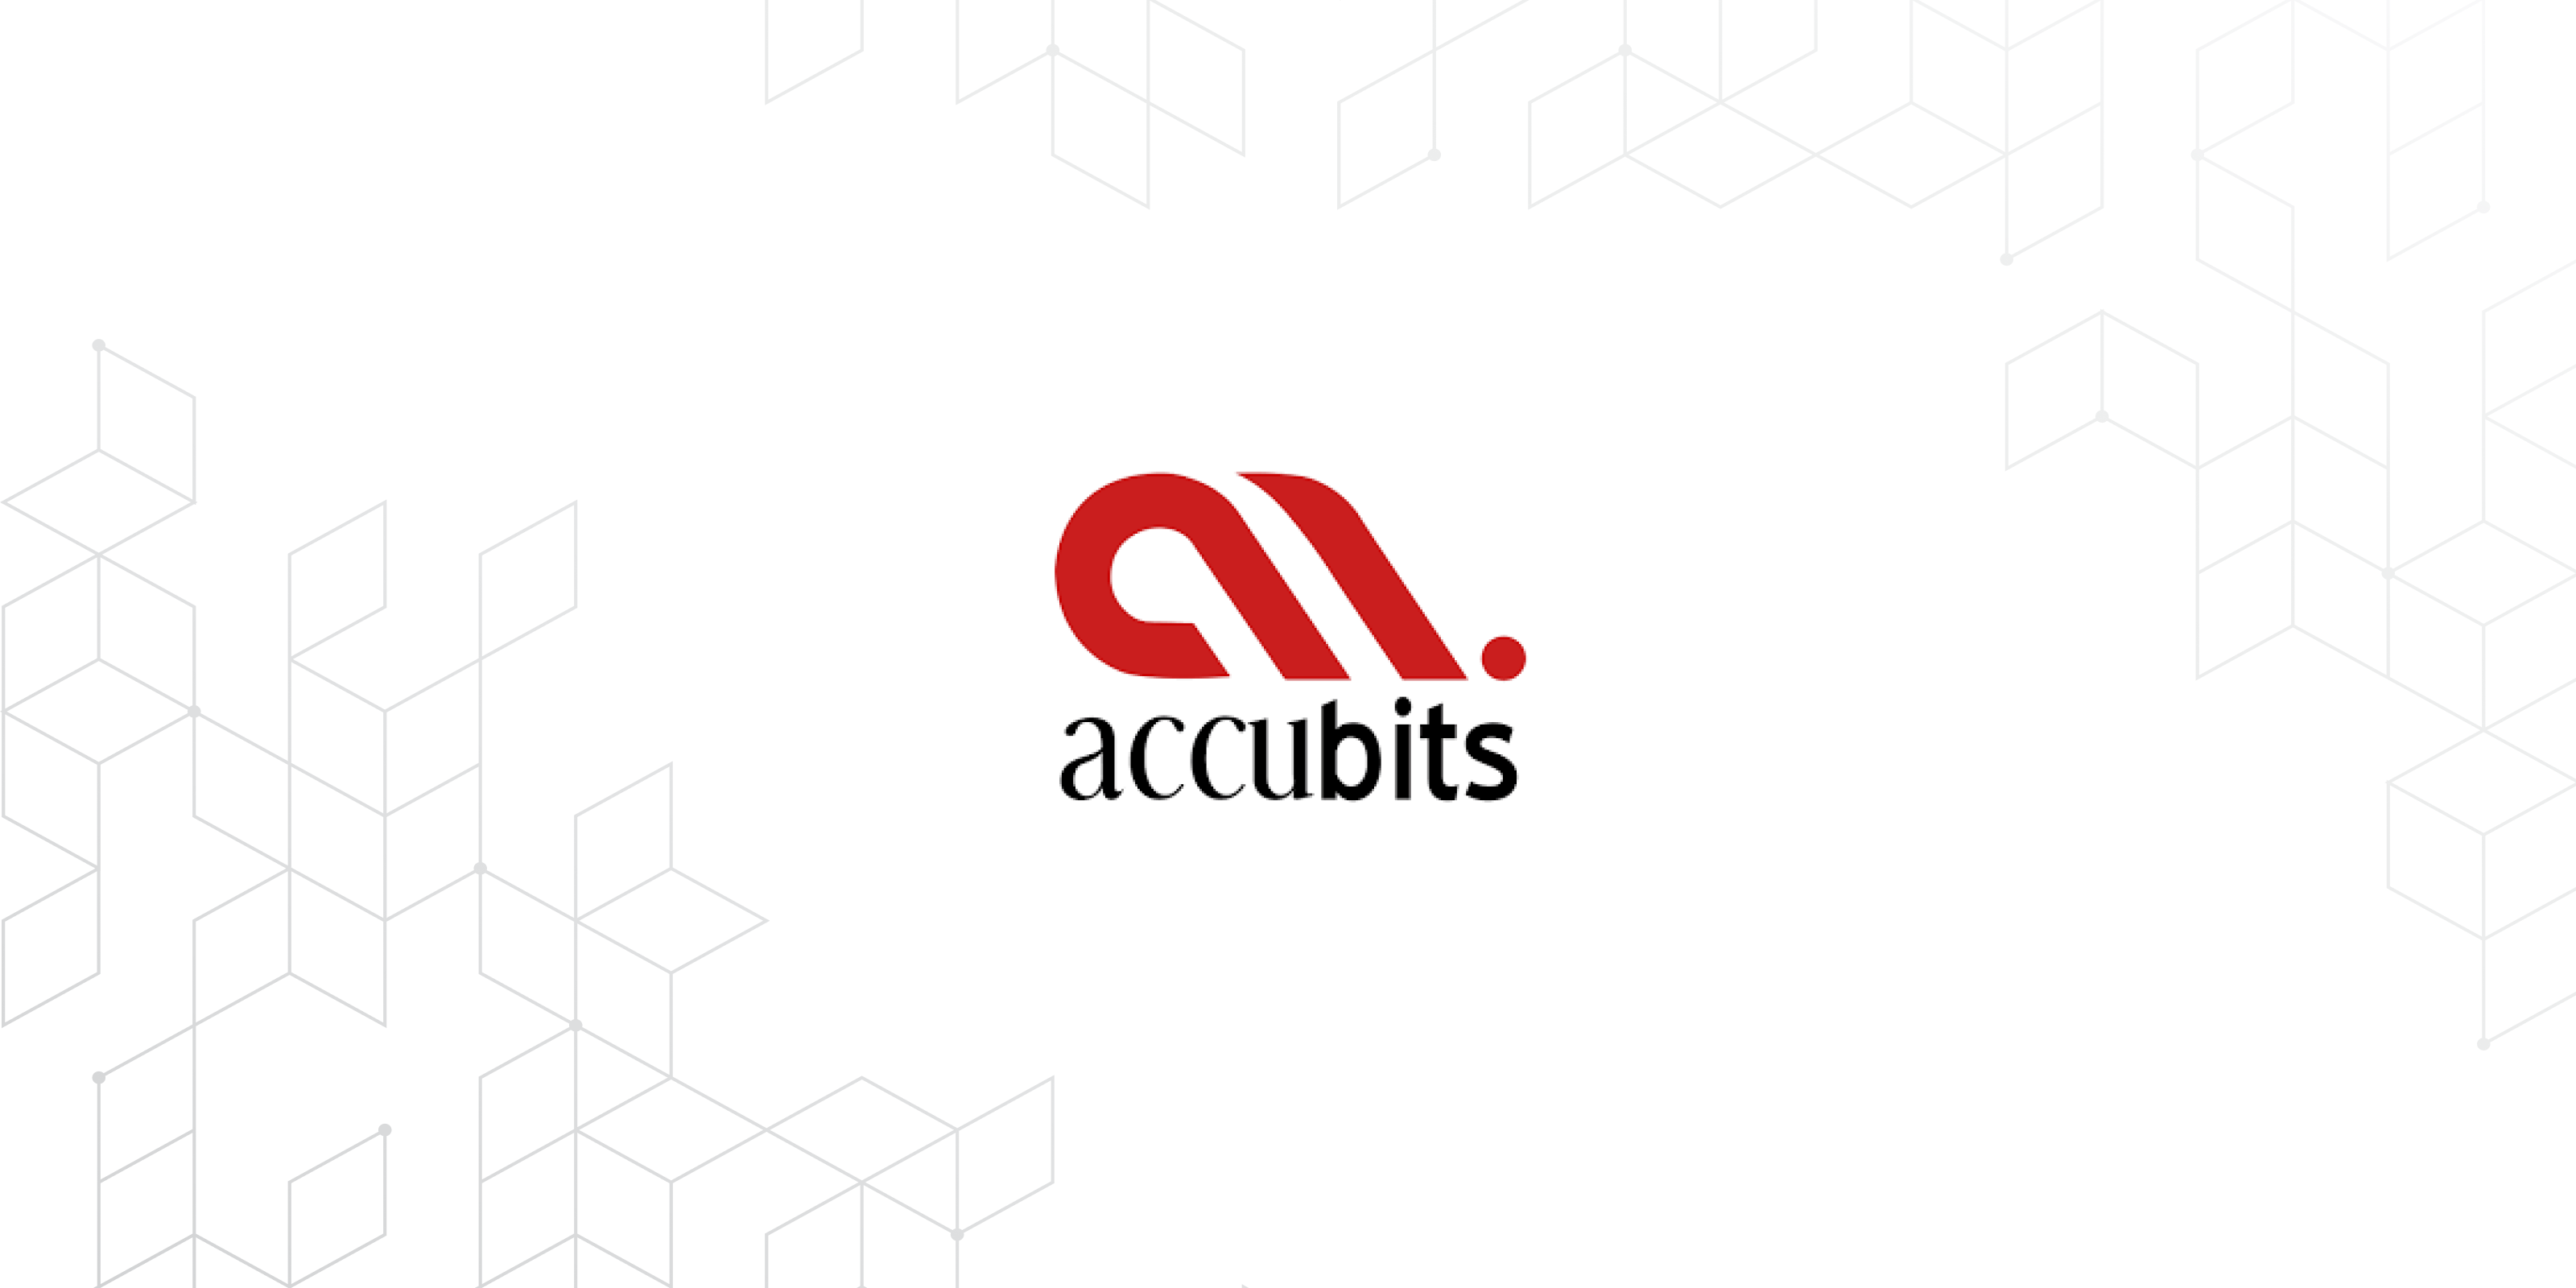 Accubits' logo